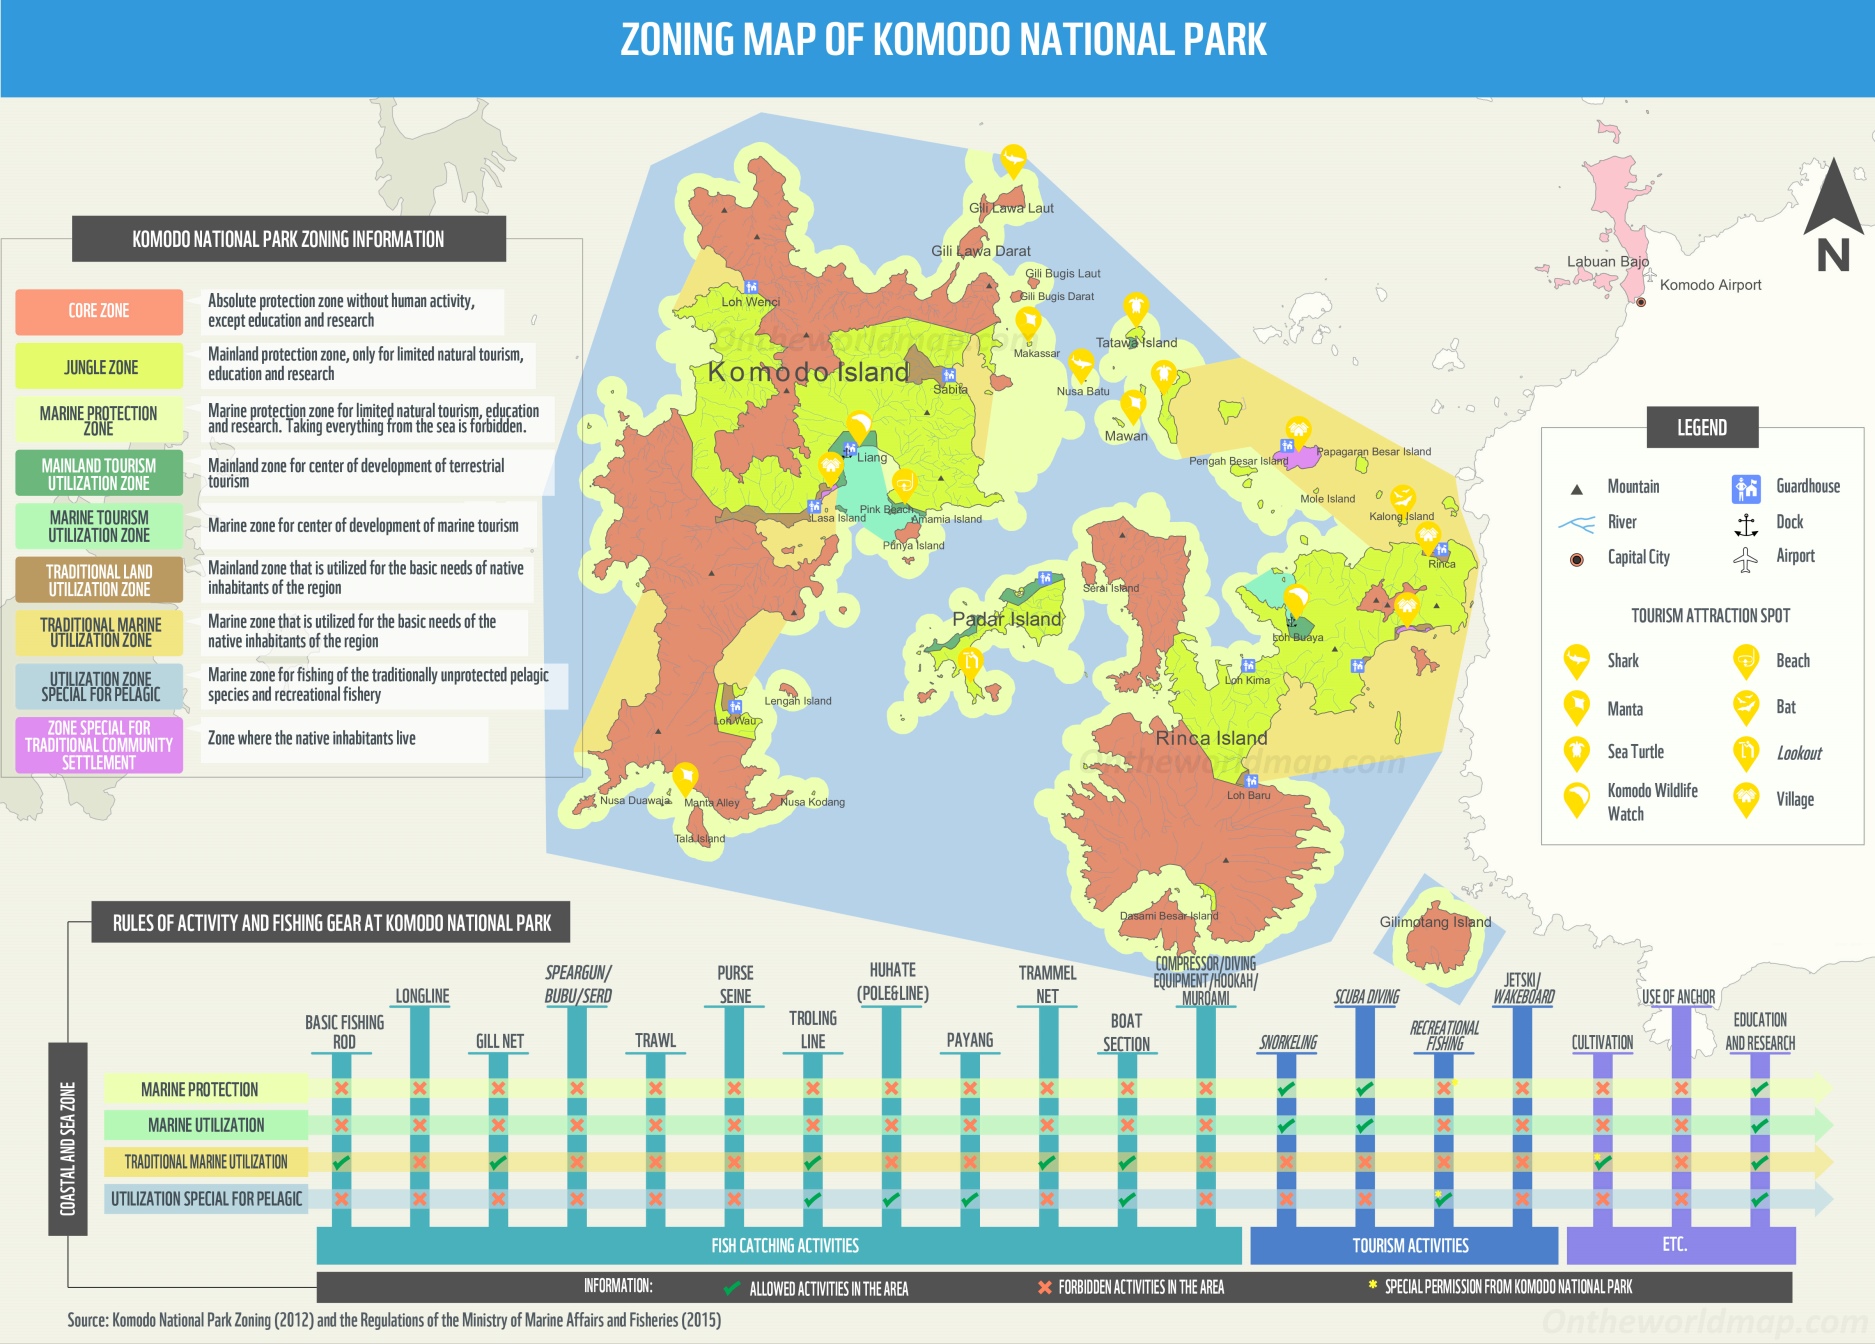 Zoning Map of Komodo National Park